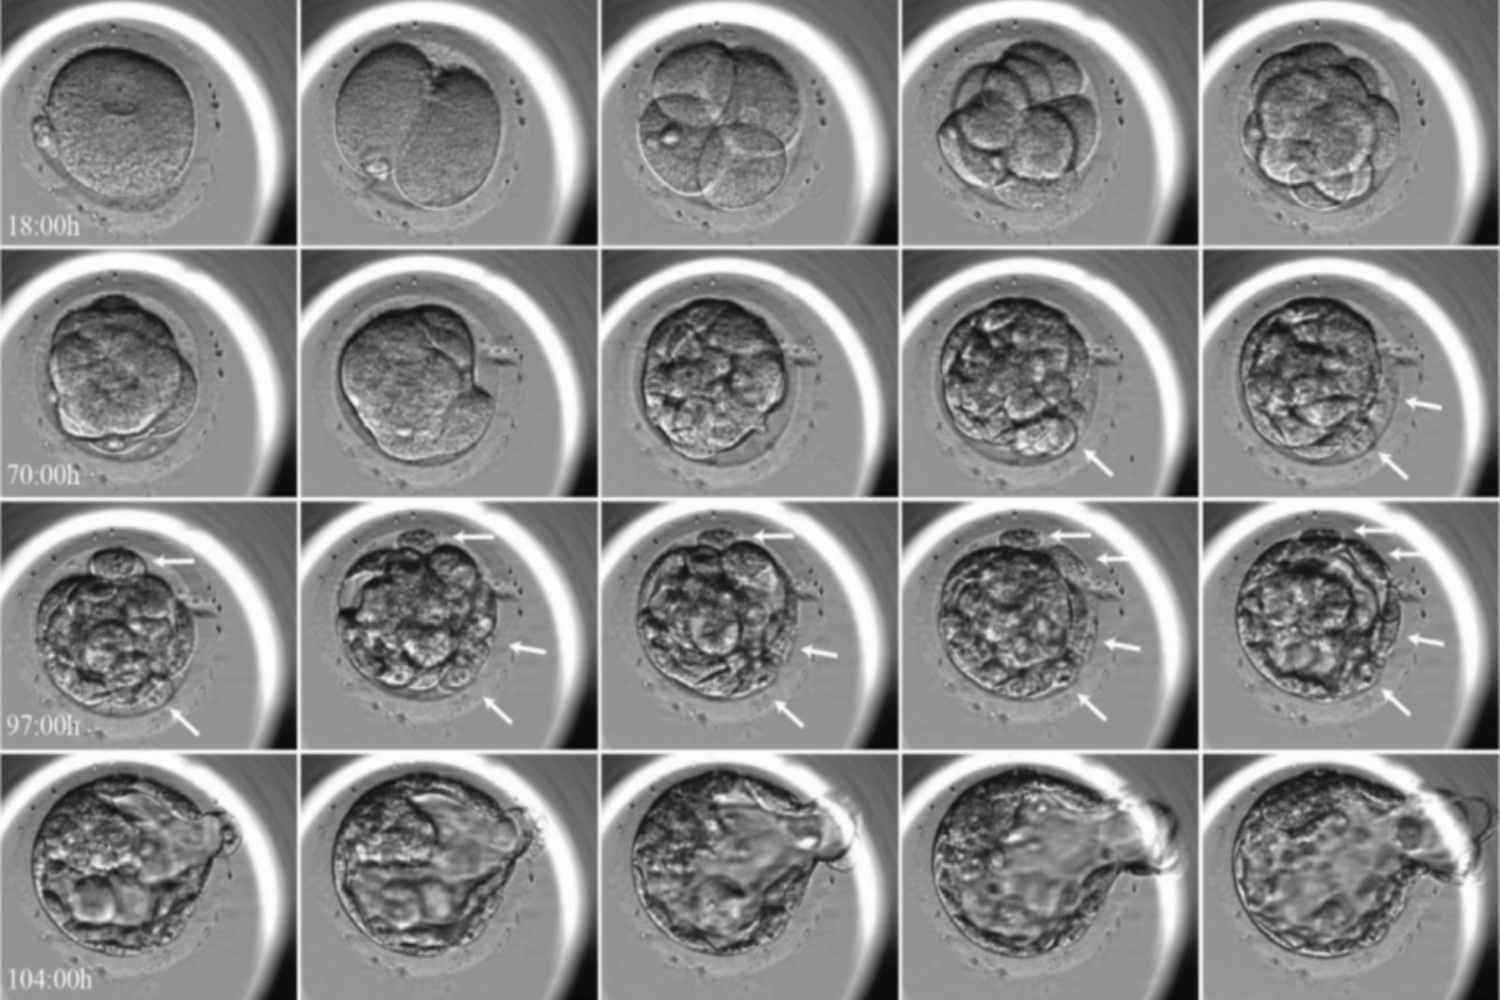 Embryoscope time lapse